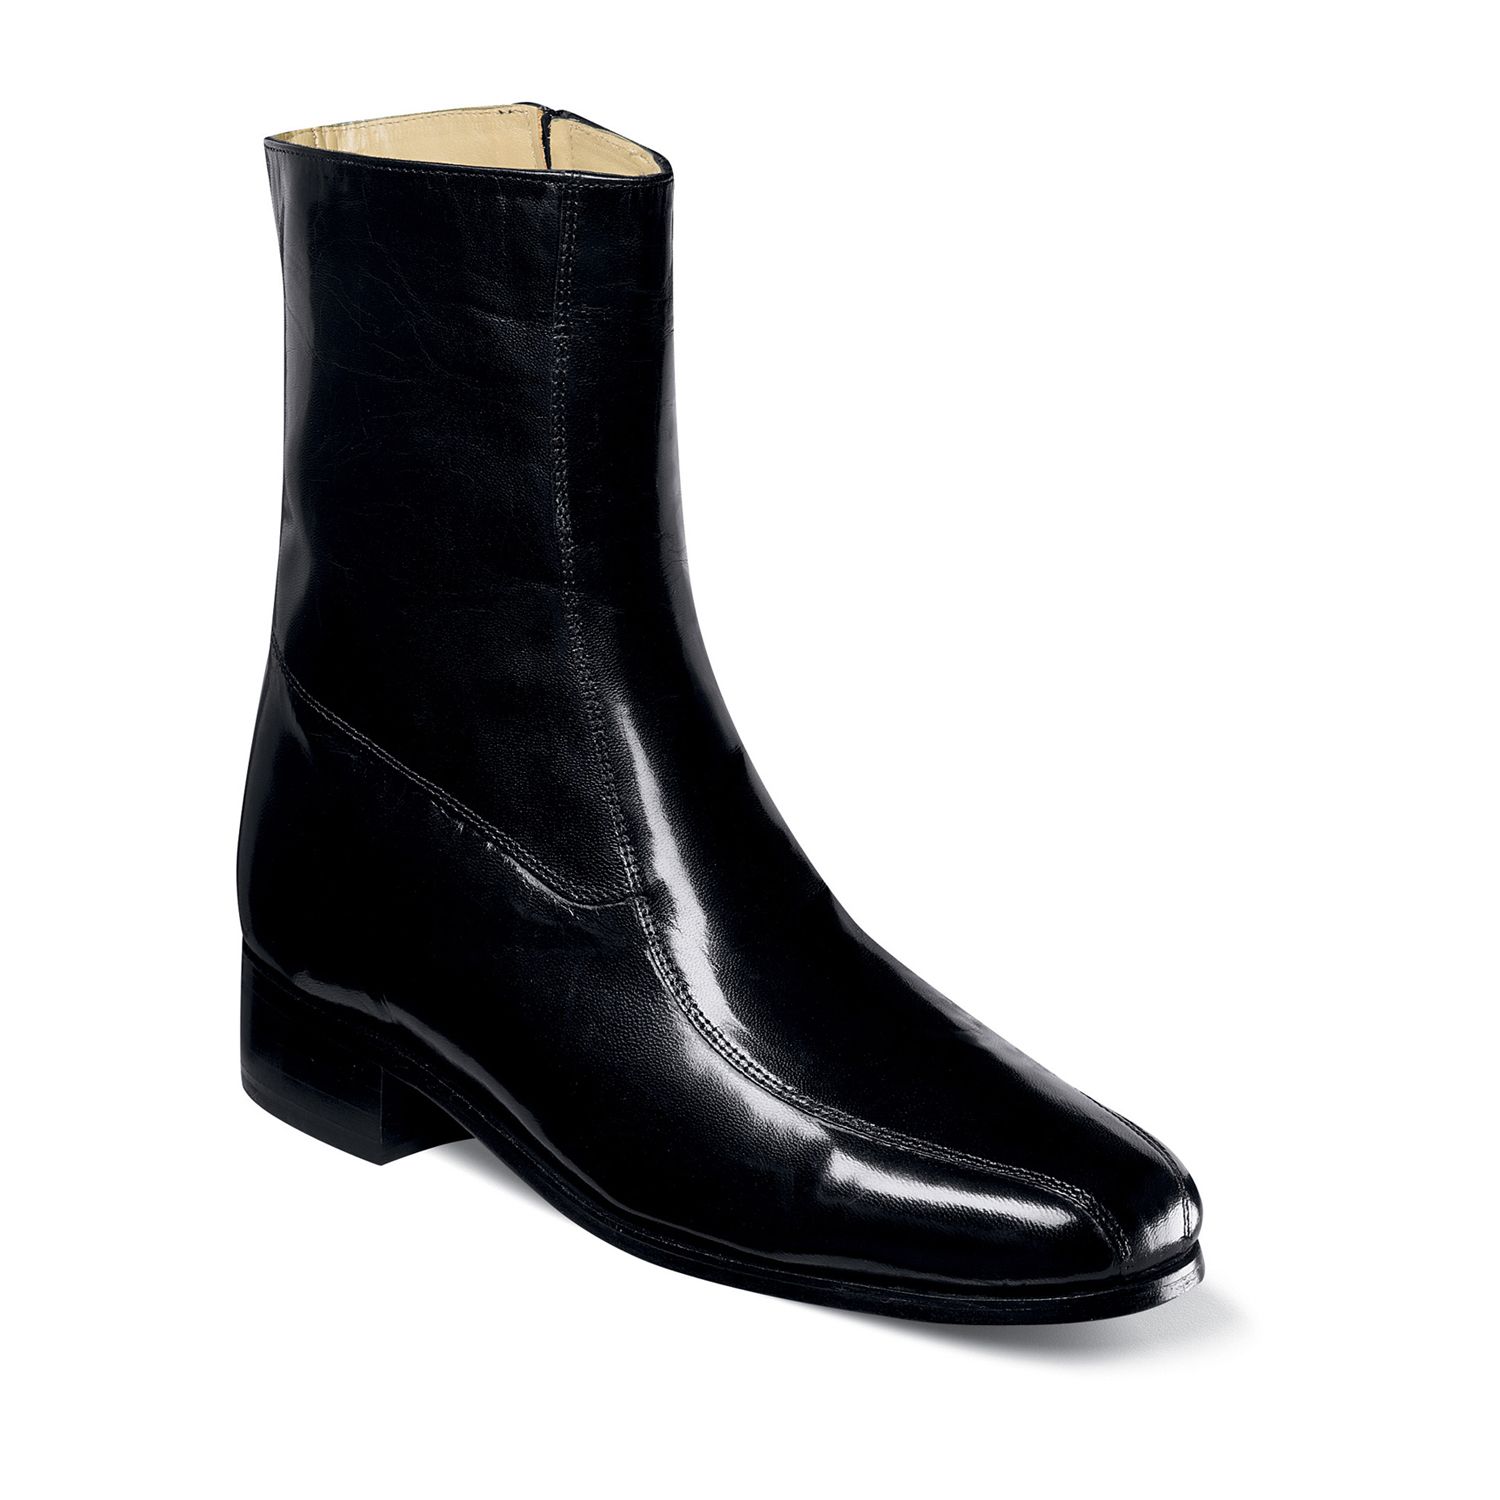 dress boots for men black